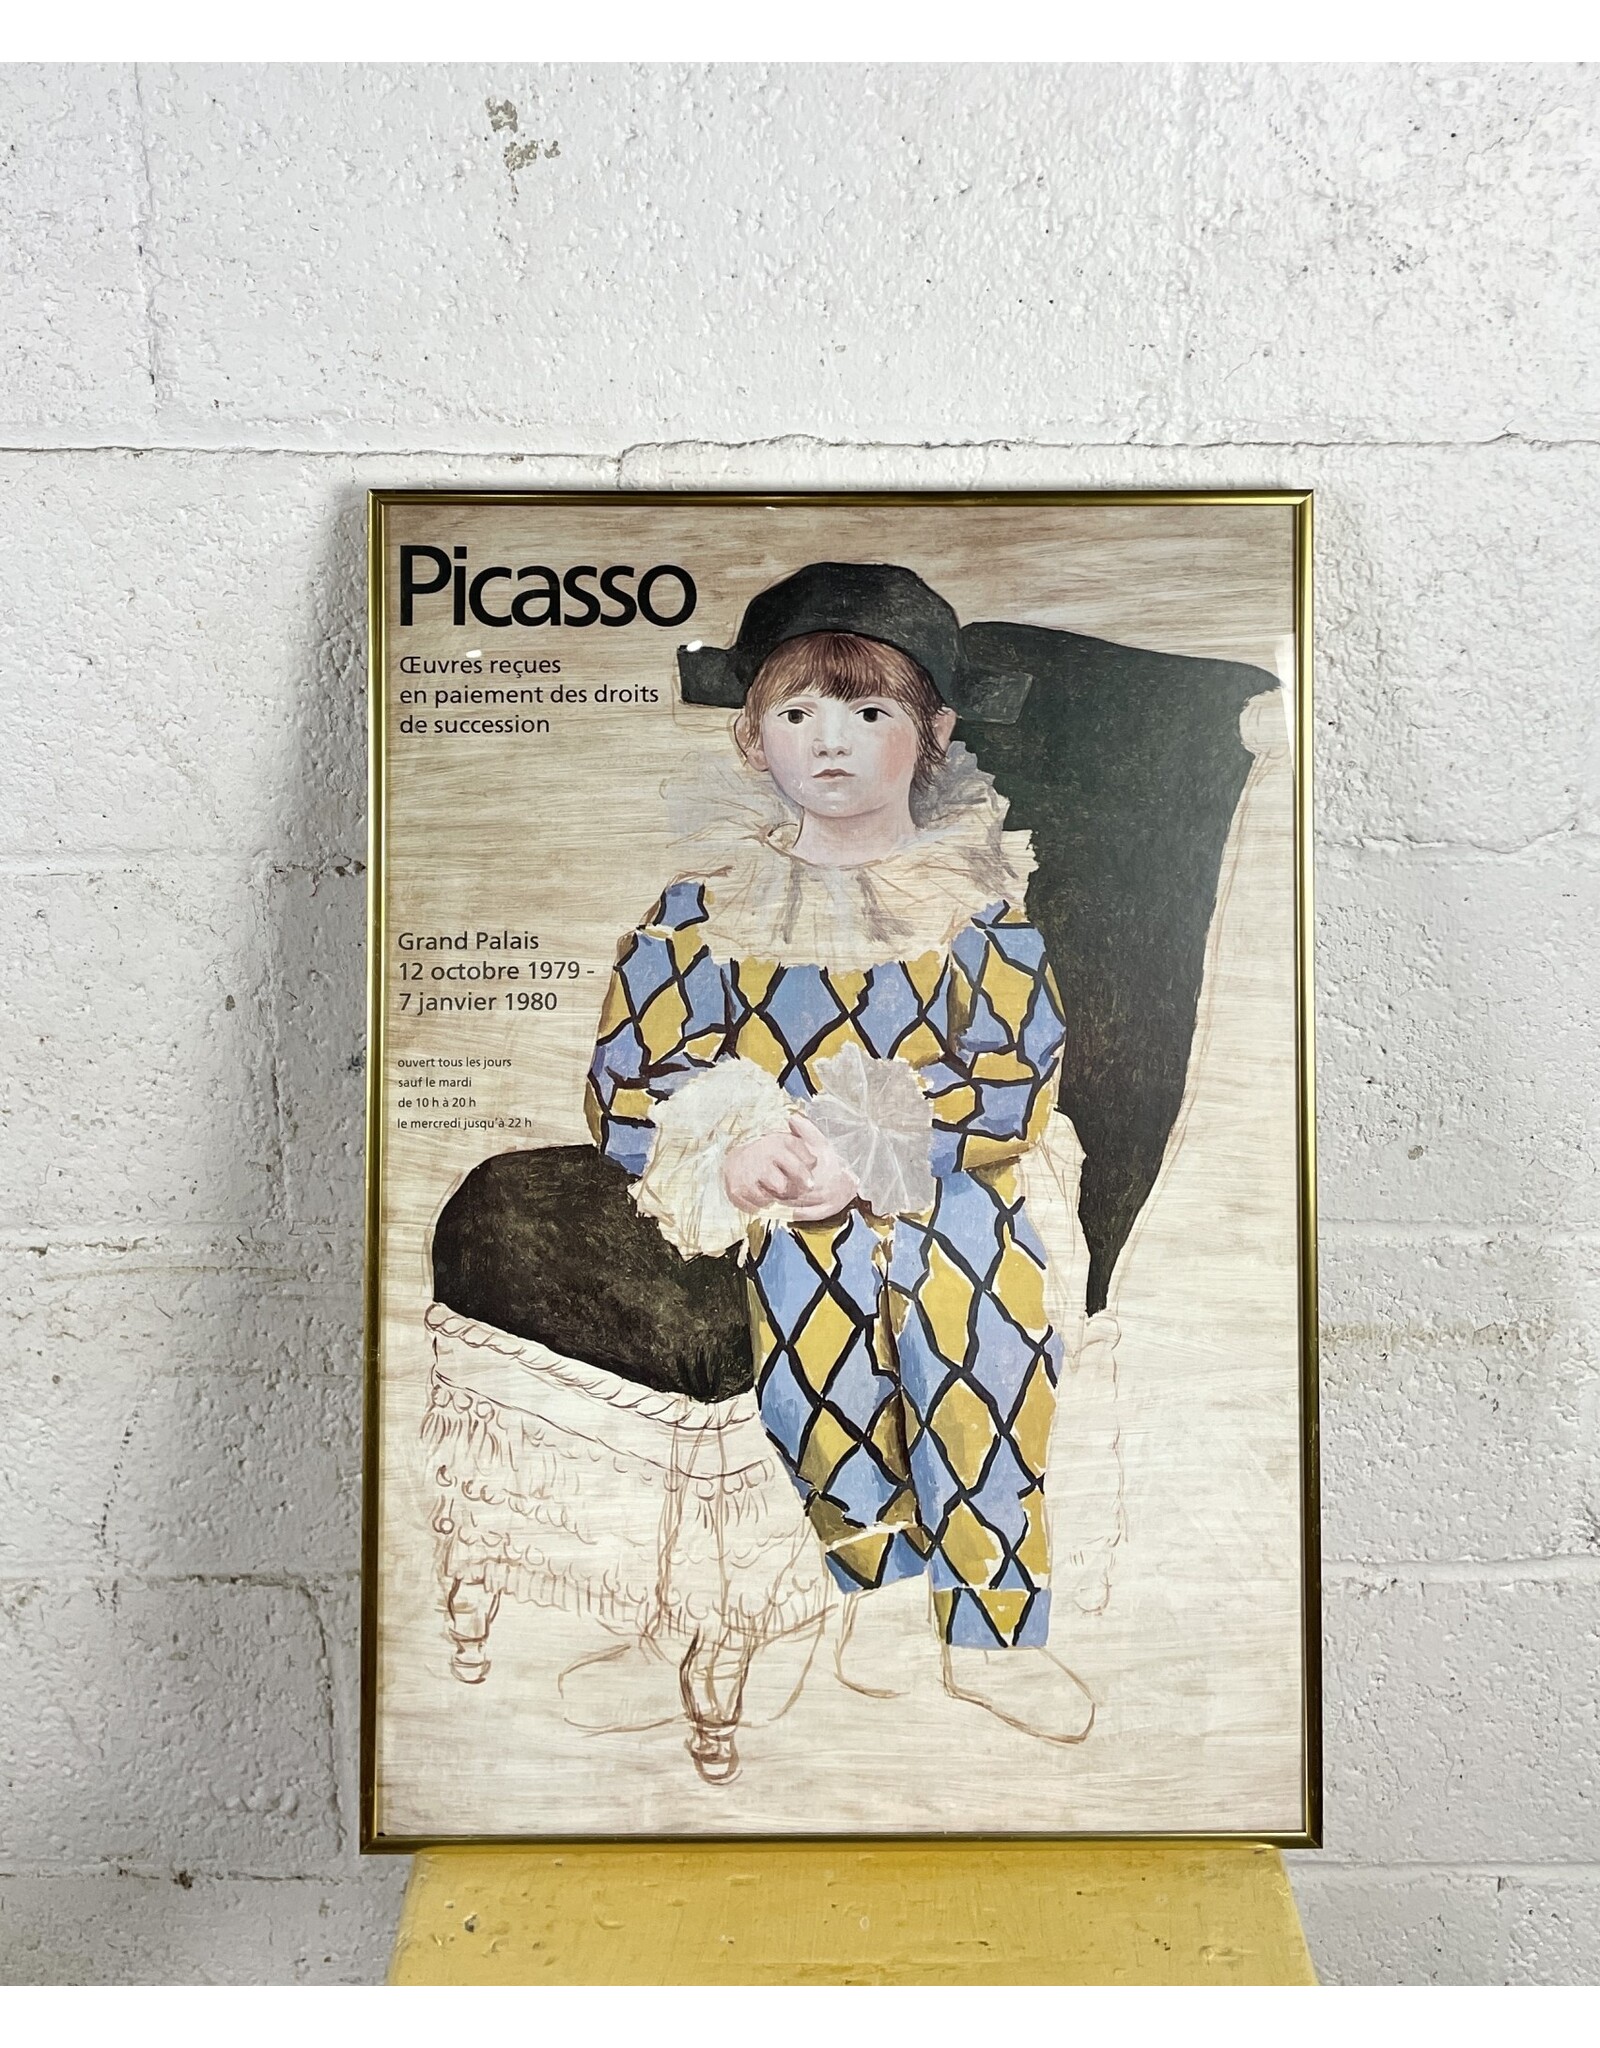 Picasso at the Grand Palais Paris 1979 Framed Poster